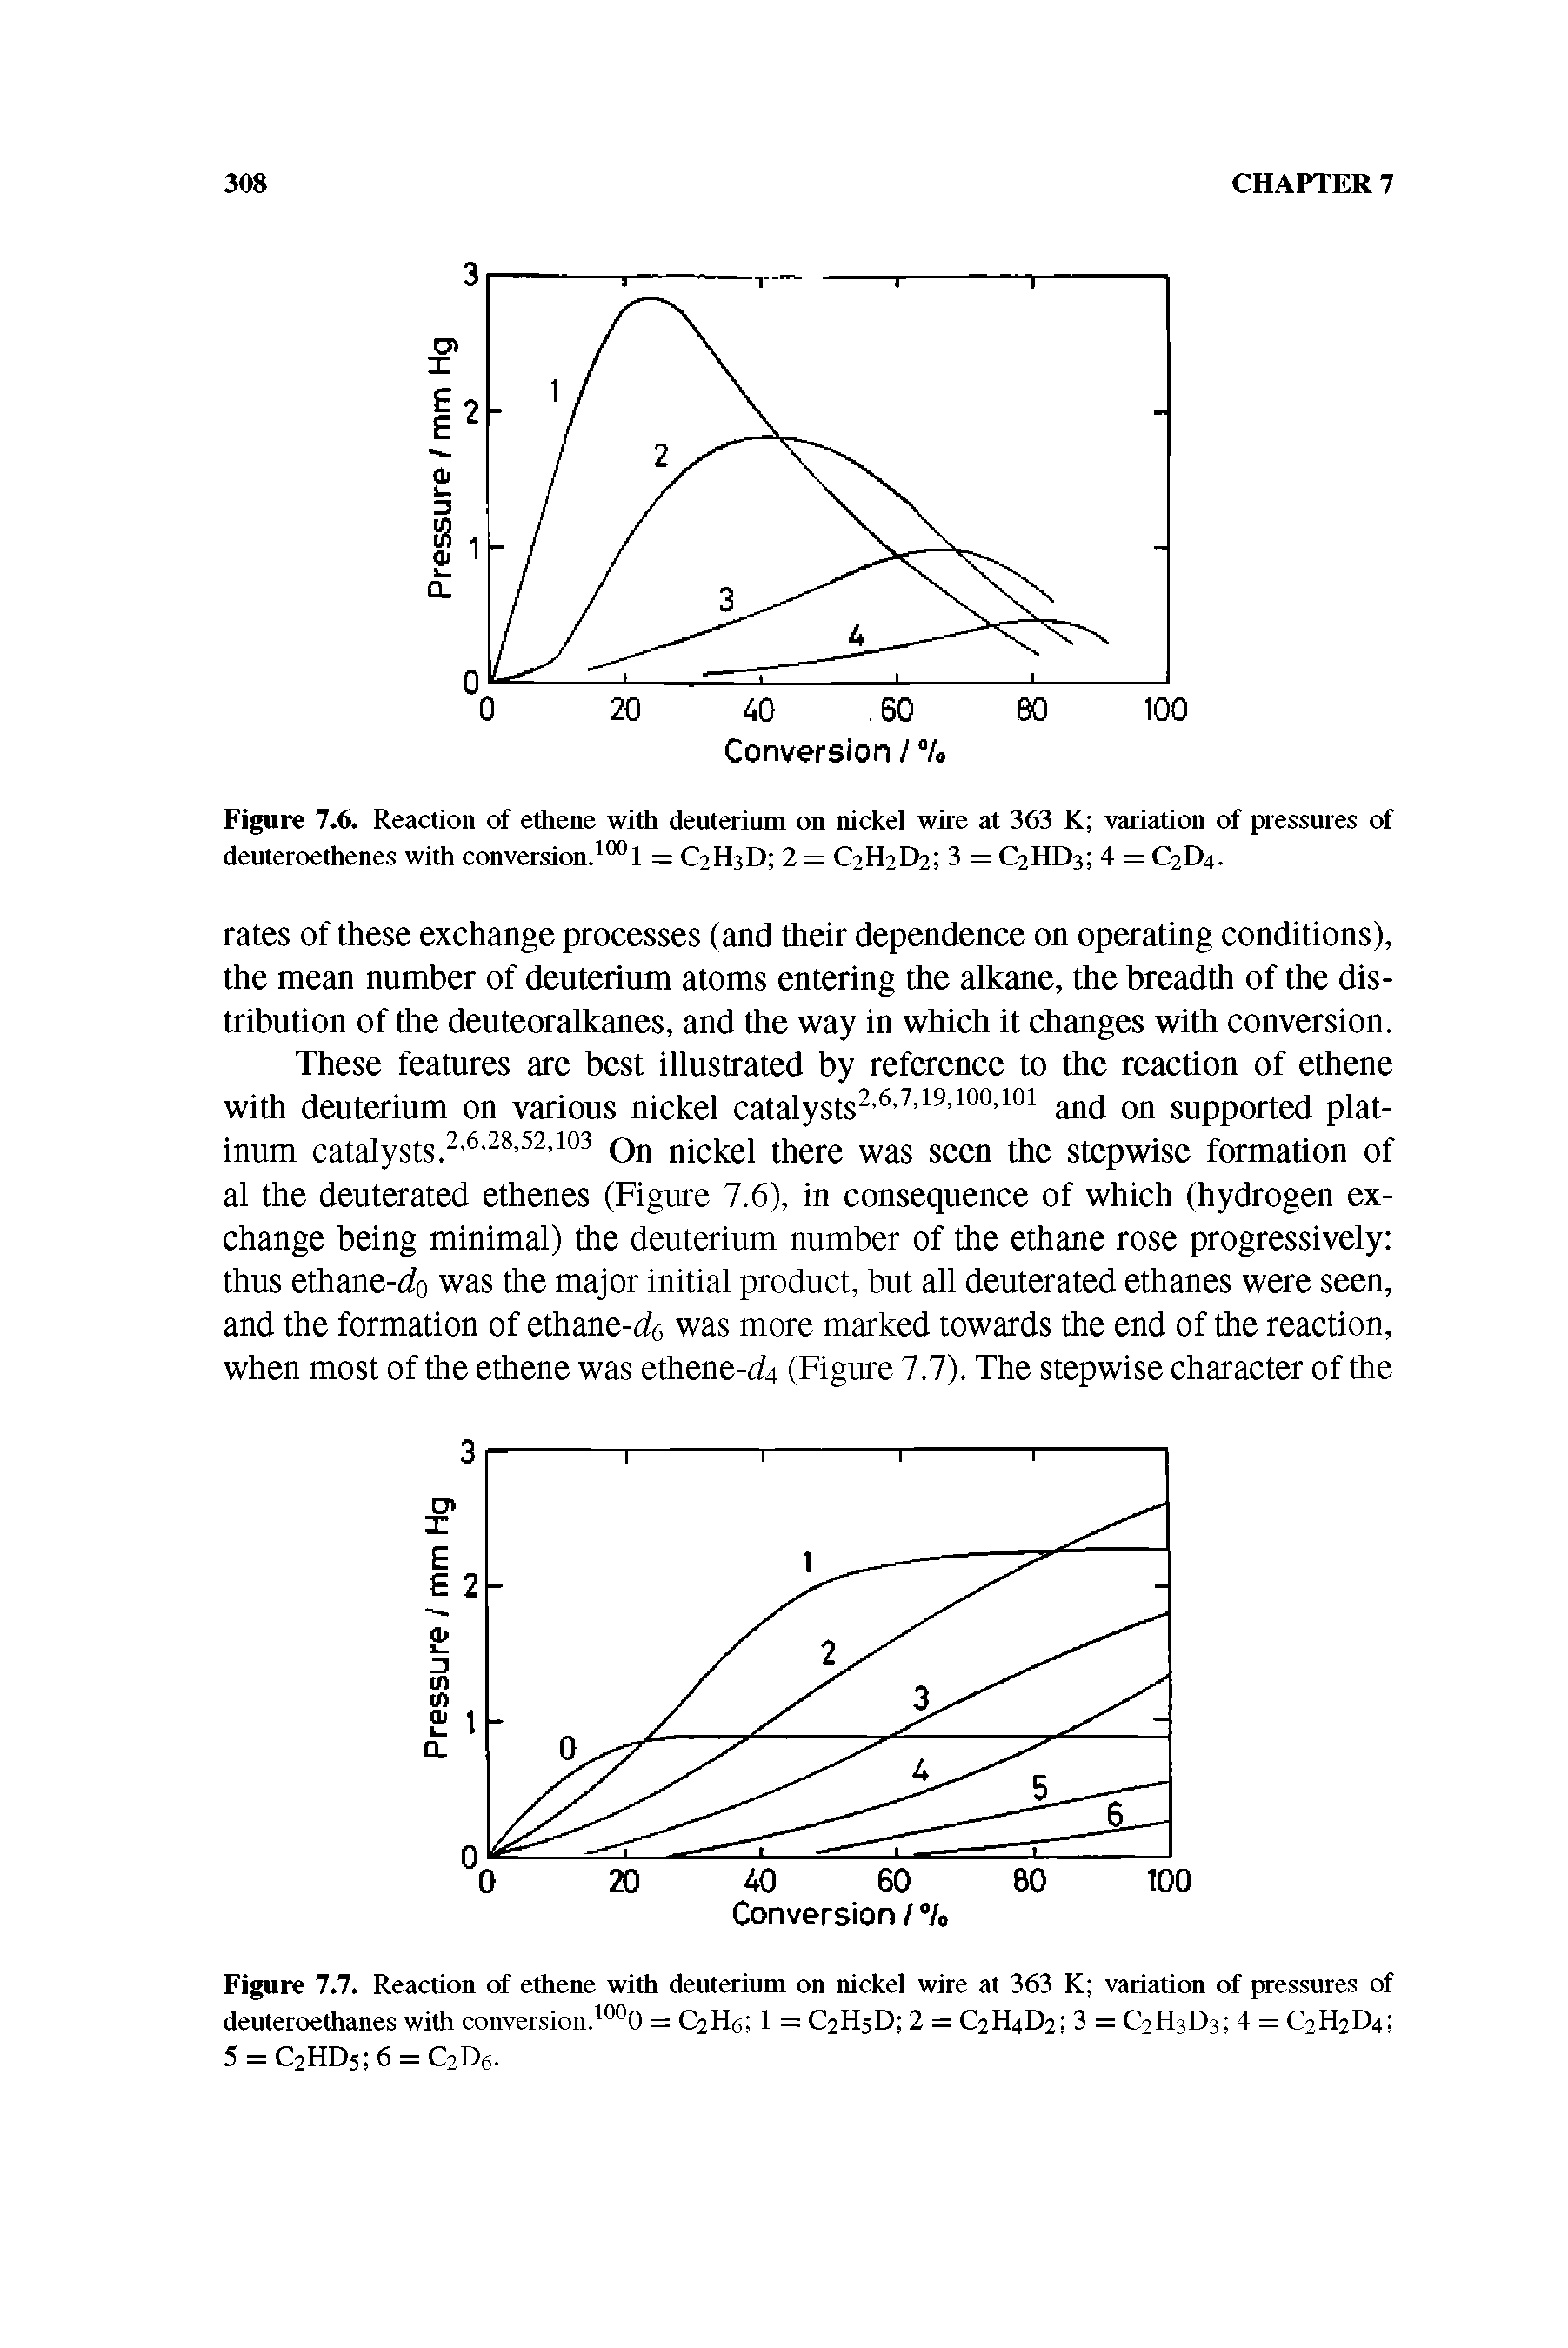 Figure 7.6. Reaction of ethene with deuterium on nickel wire at 363 K variation of pressures of deuteroethenes with conversion. = C2H3D 2 = C2H2D2 3 = C2HD3 4 = C2D4.